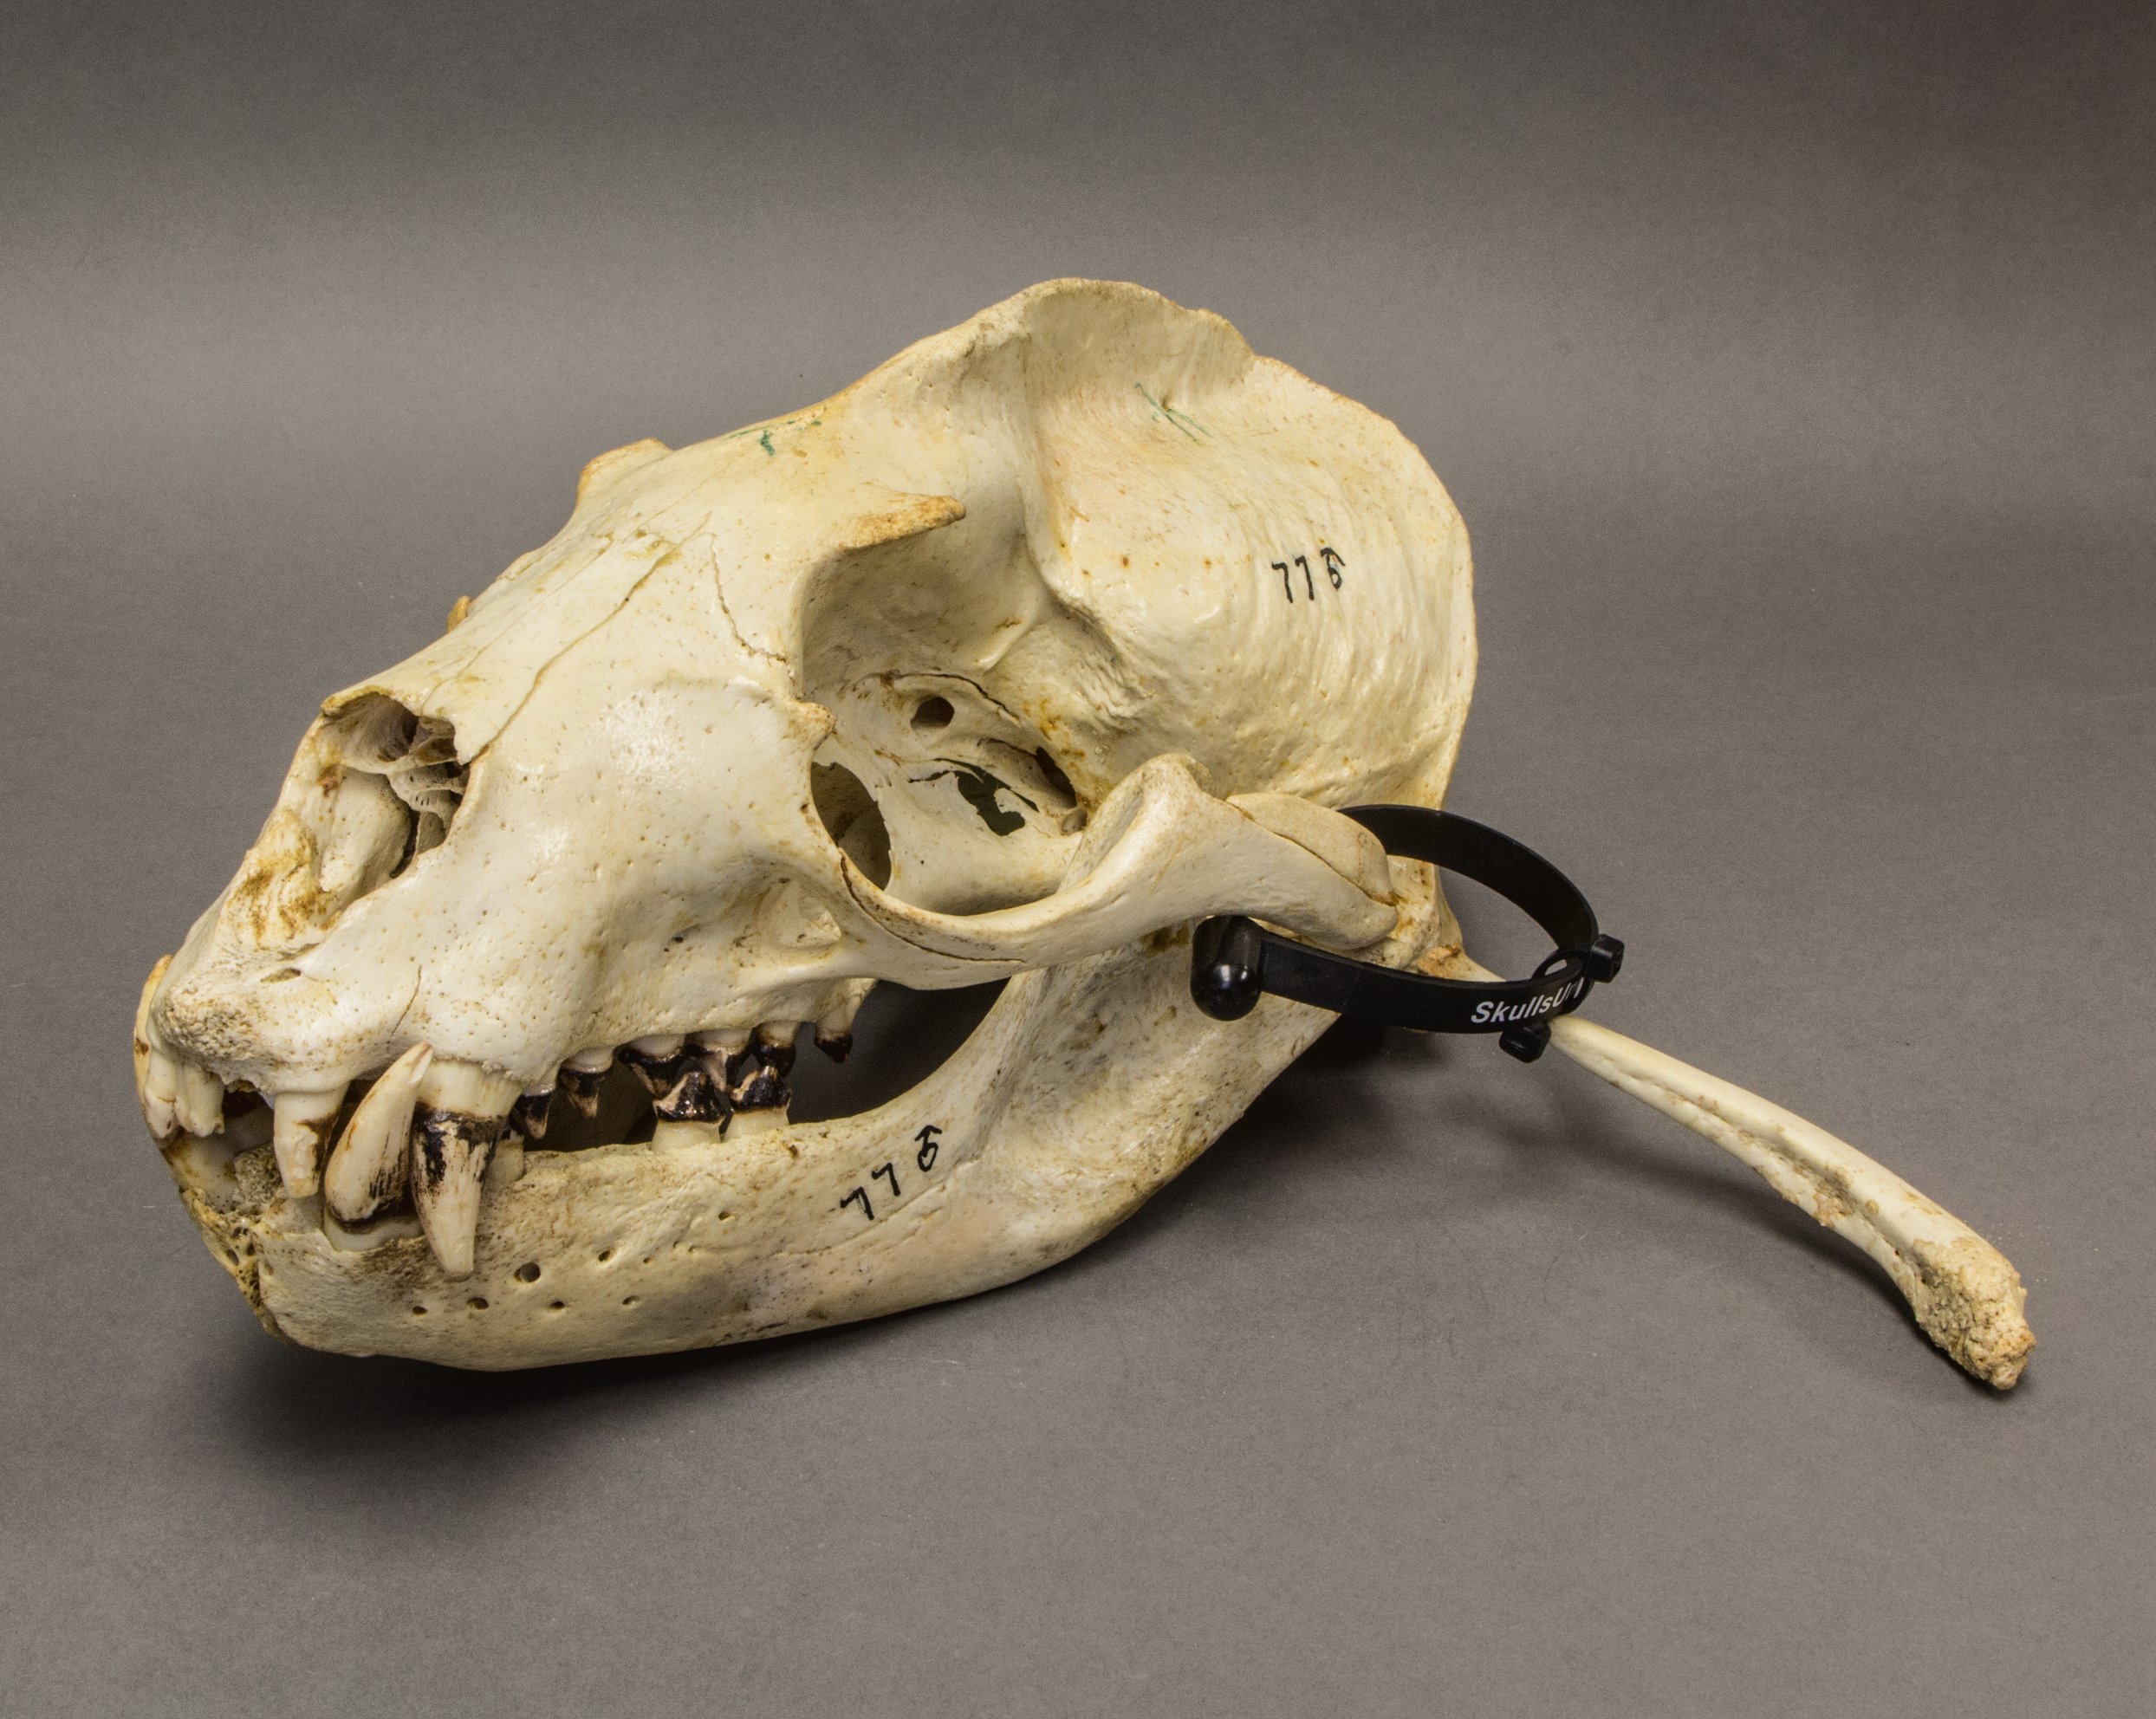 California Sea Lion Skull For Sale – Skulls Unlimited International ...